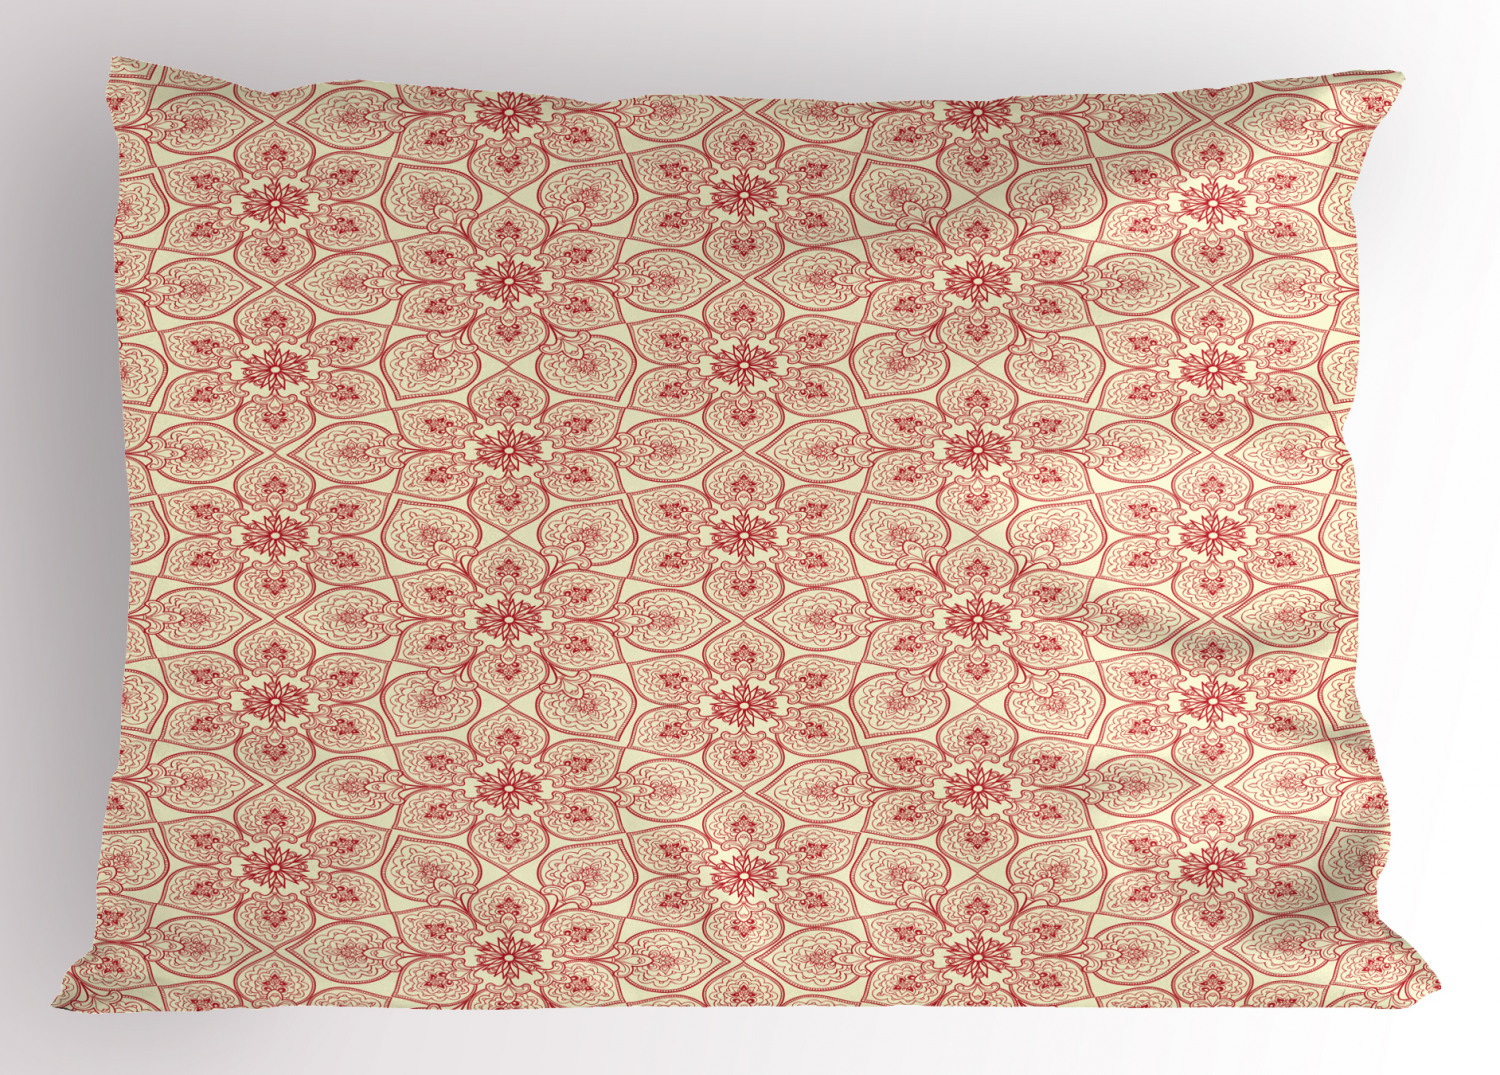 Details about   Oriental and Nature Pillow Sham Decorative Pillowcase 3 Sizes Bedroom Decor 